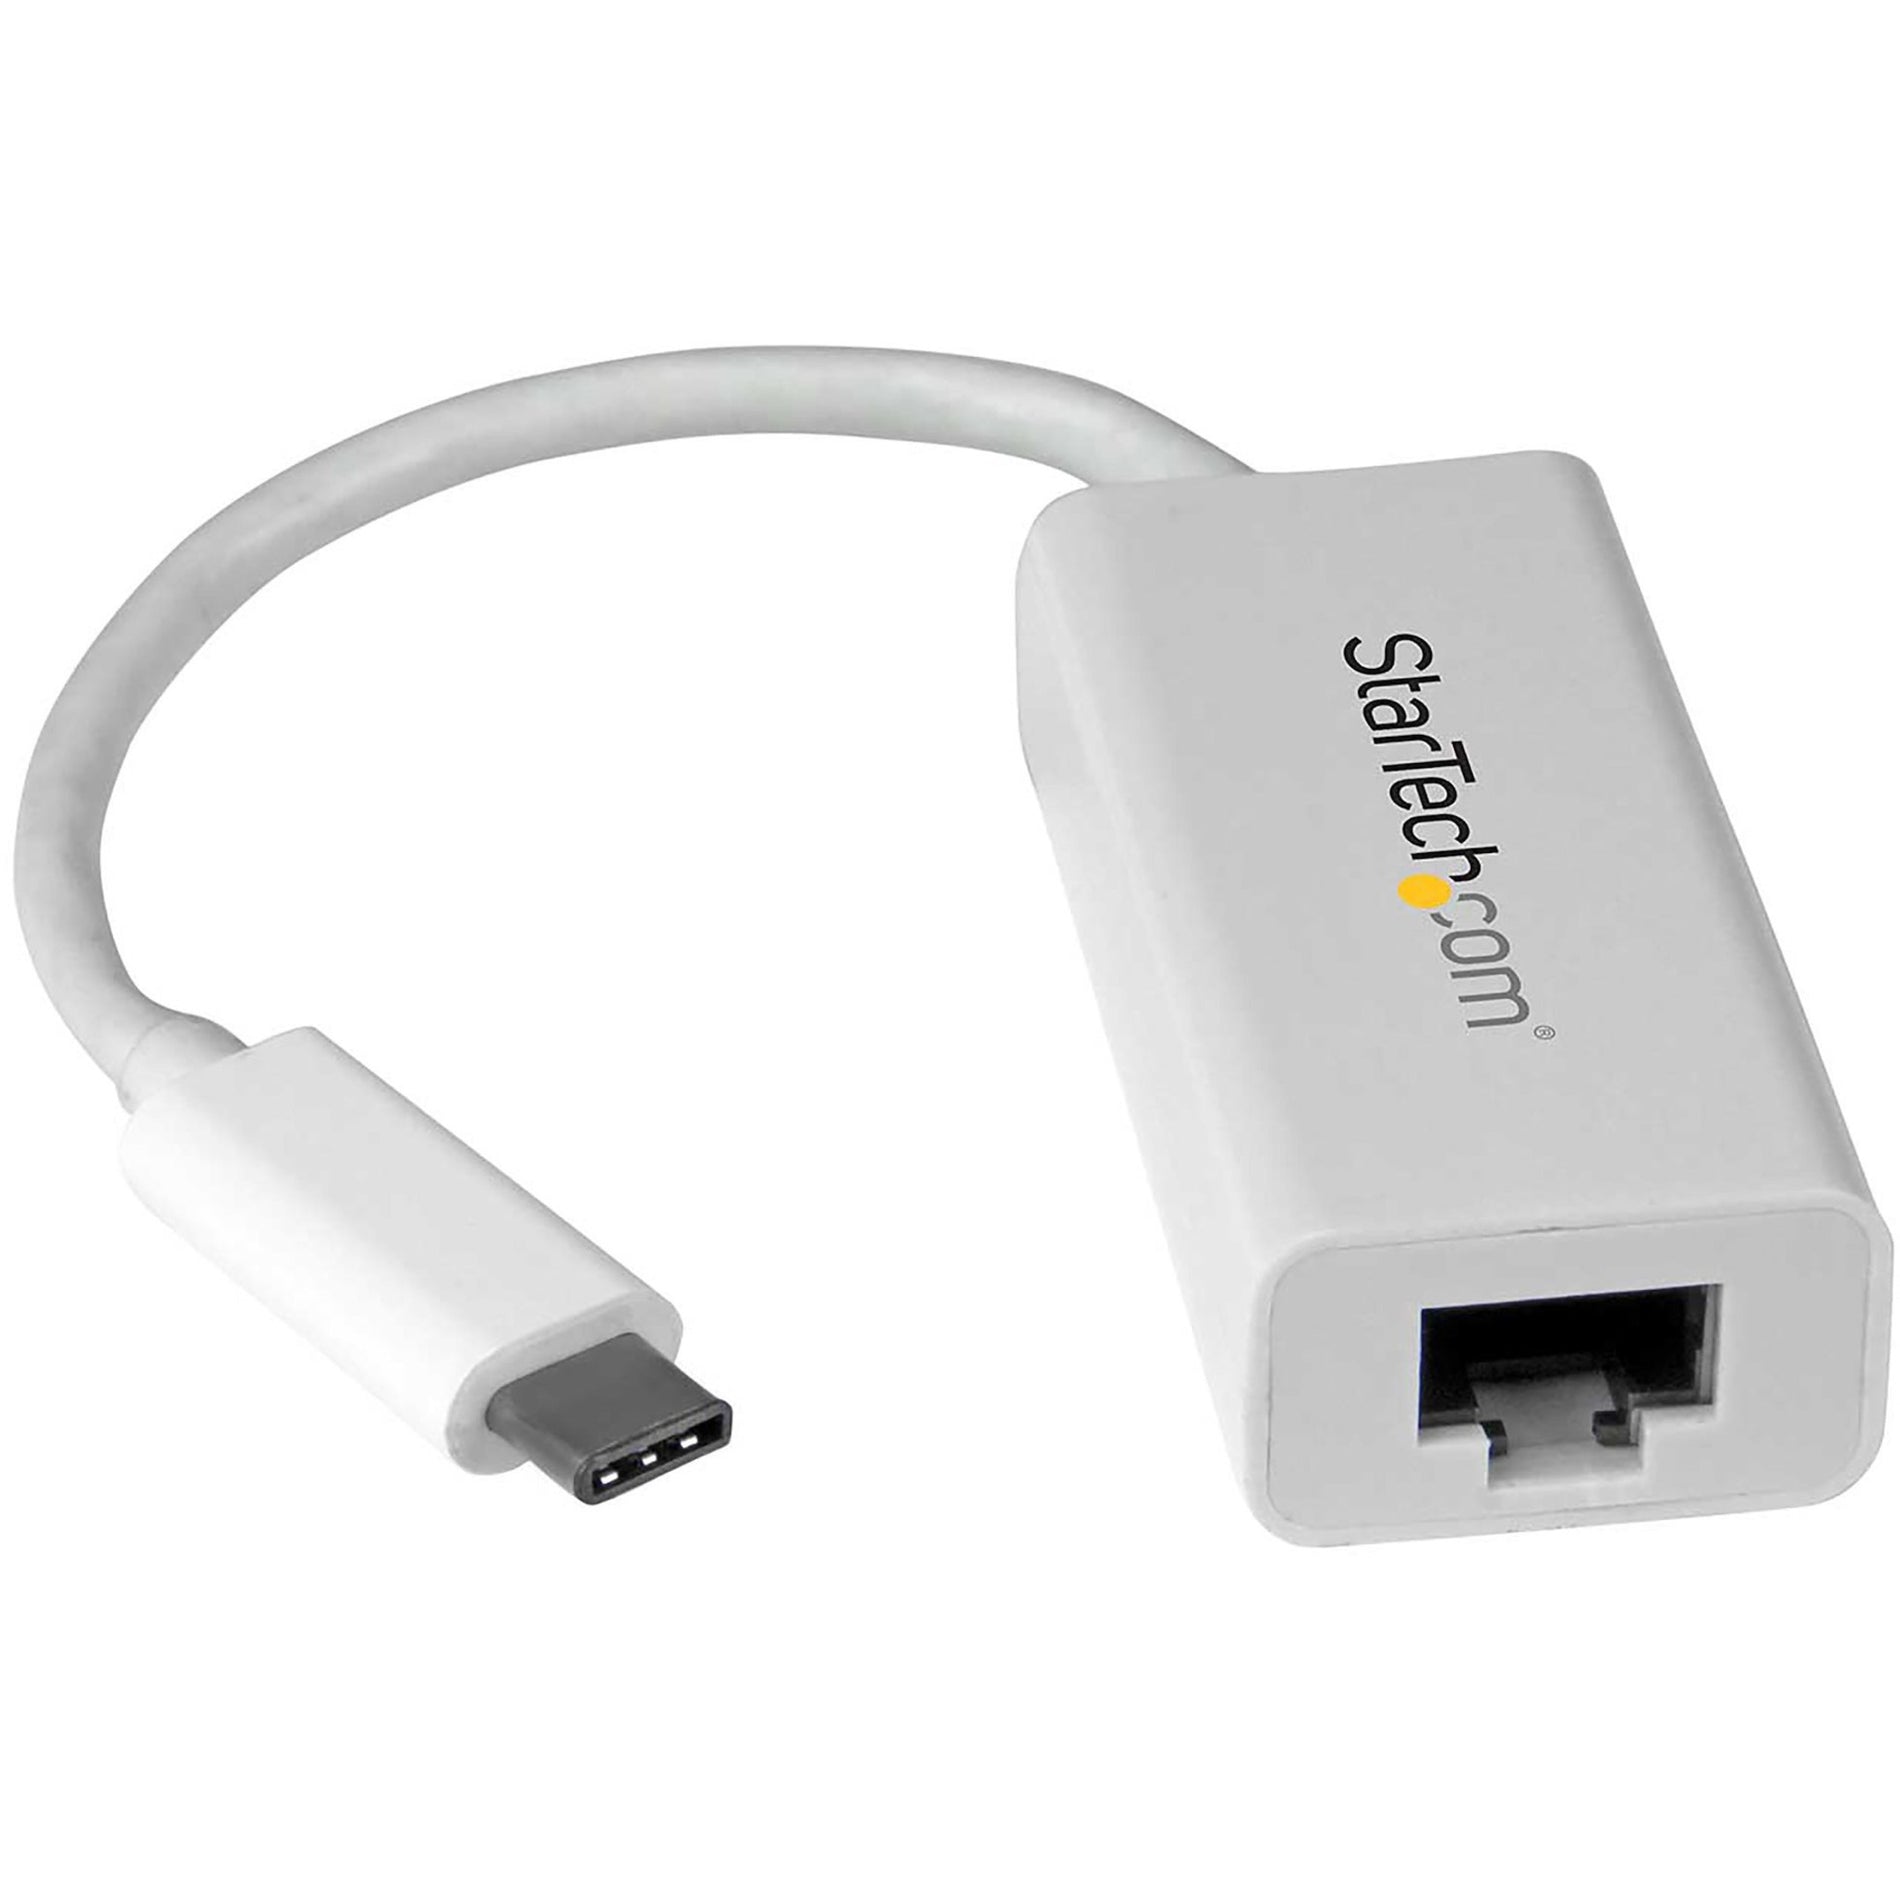 StarTech.com US1GC30W USB-C to Gigabit Network Adapter - White, USB 3.1 Gen 1 (5 Gbps), Native Support